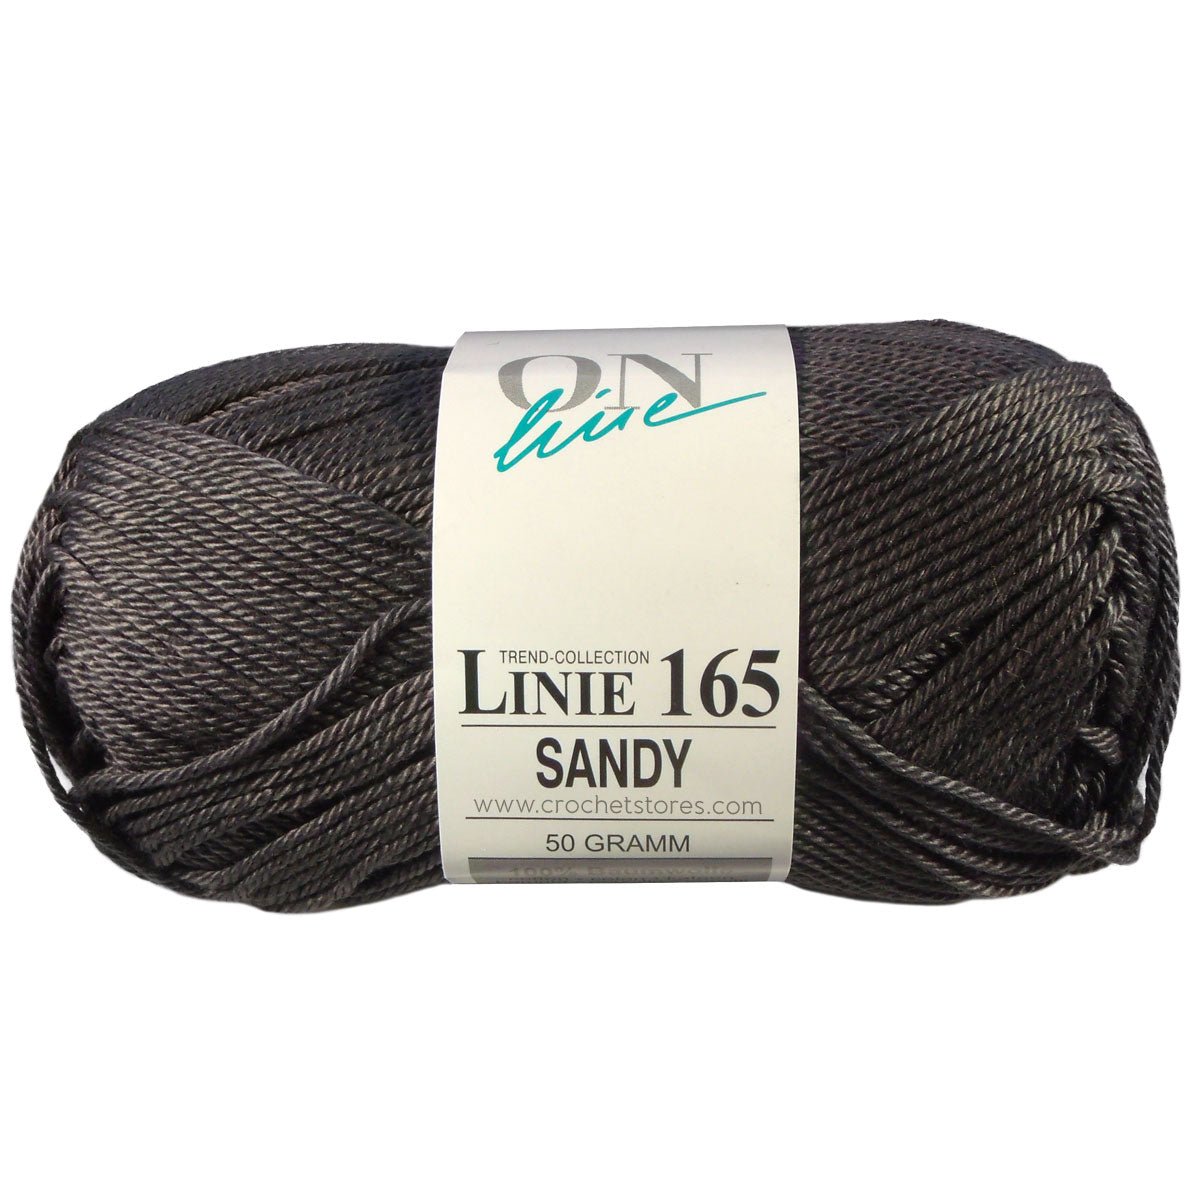 SANDY - Crochetstores110165-00644014366101994